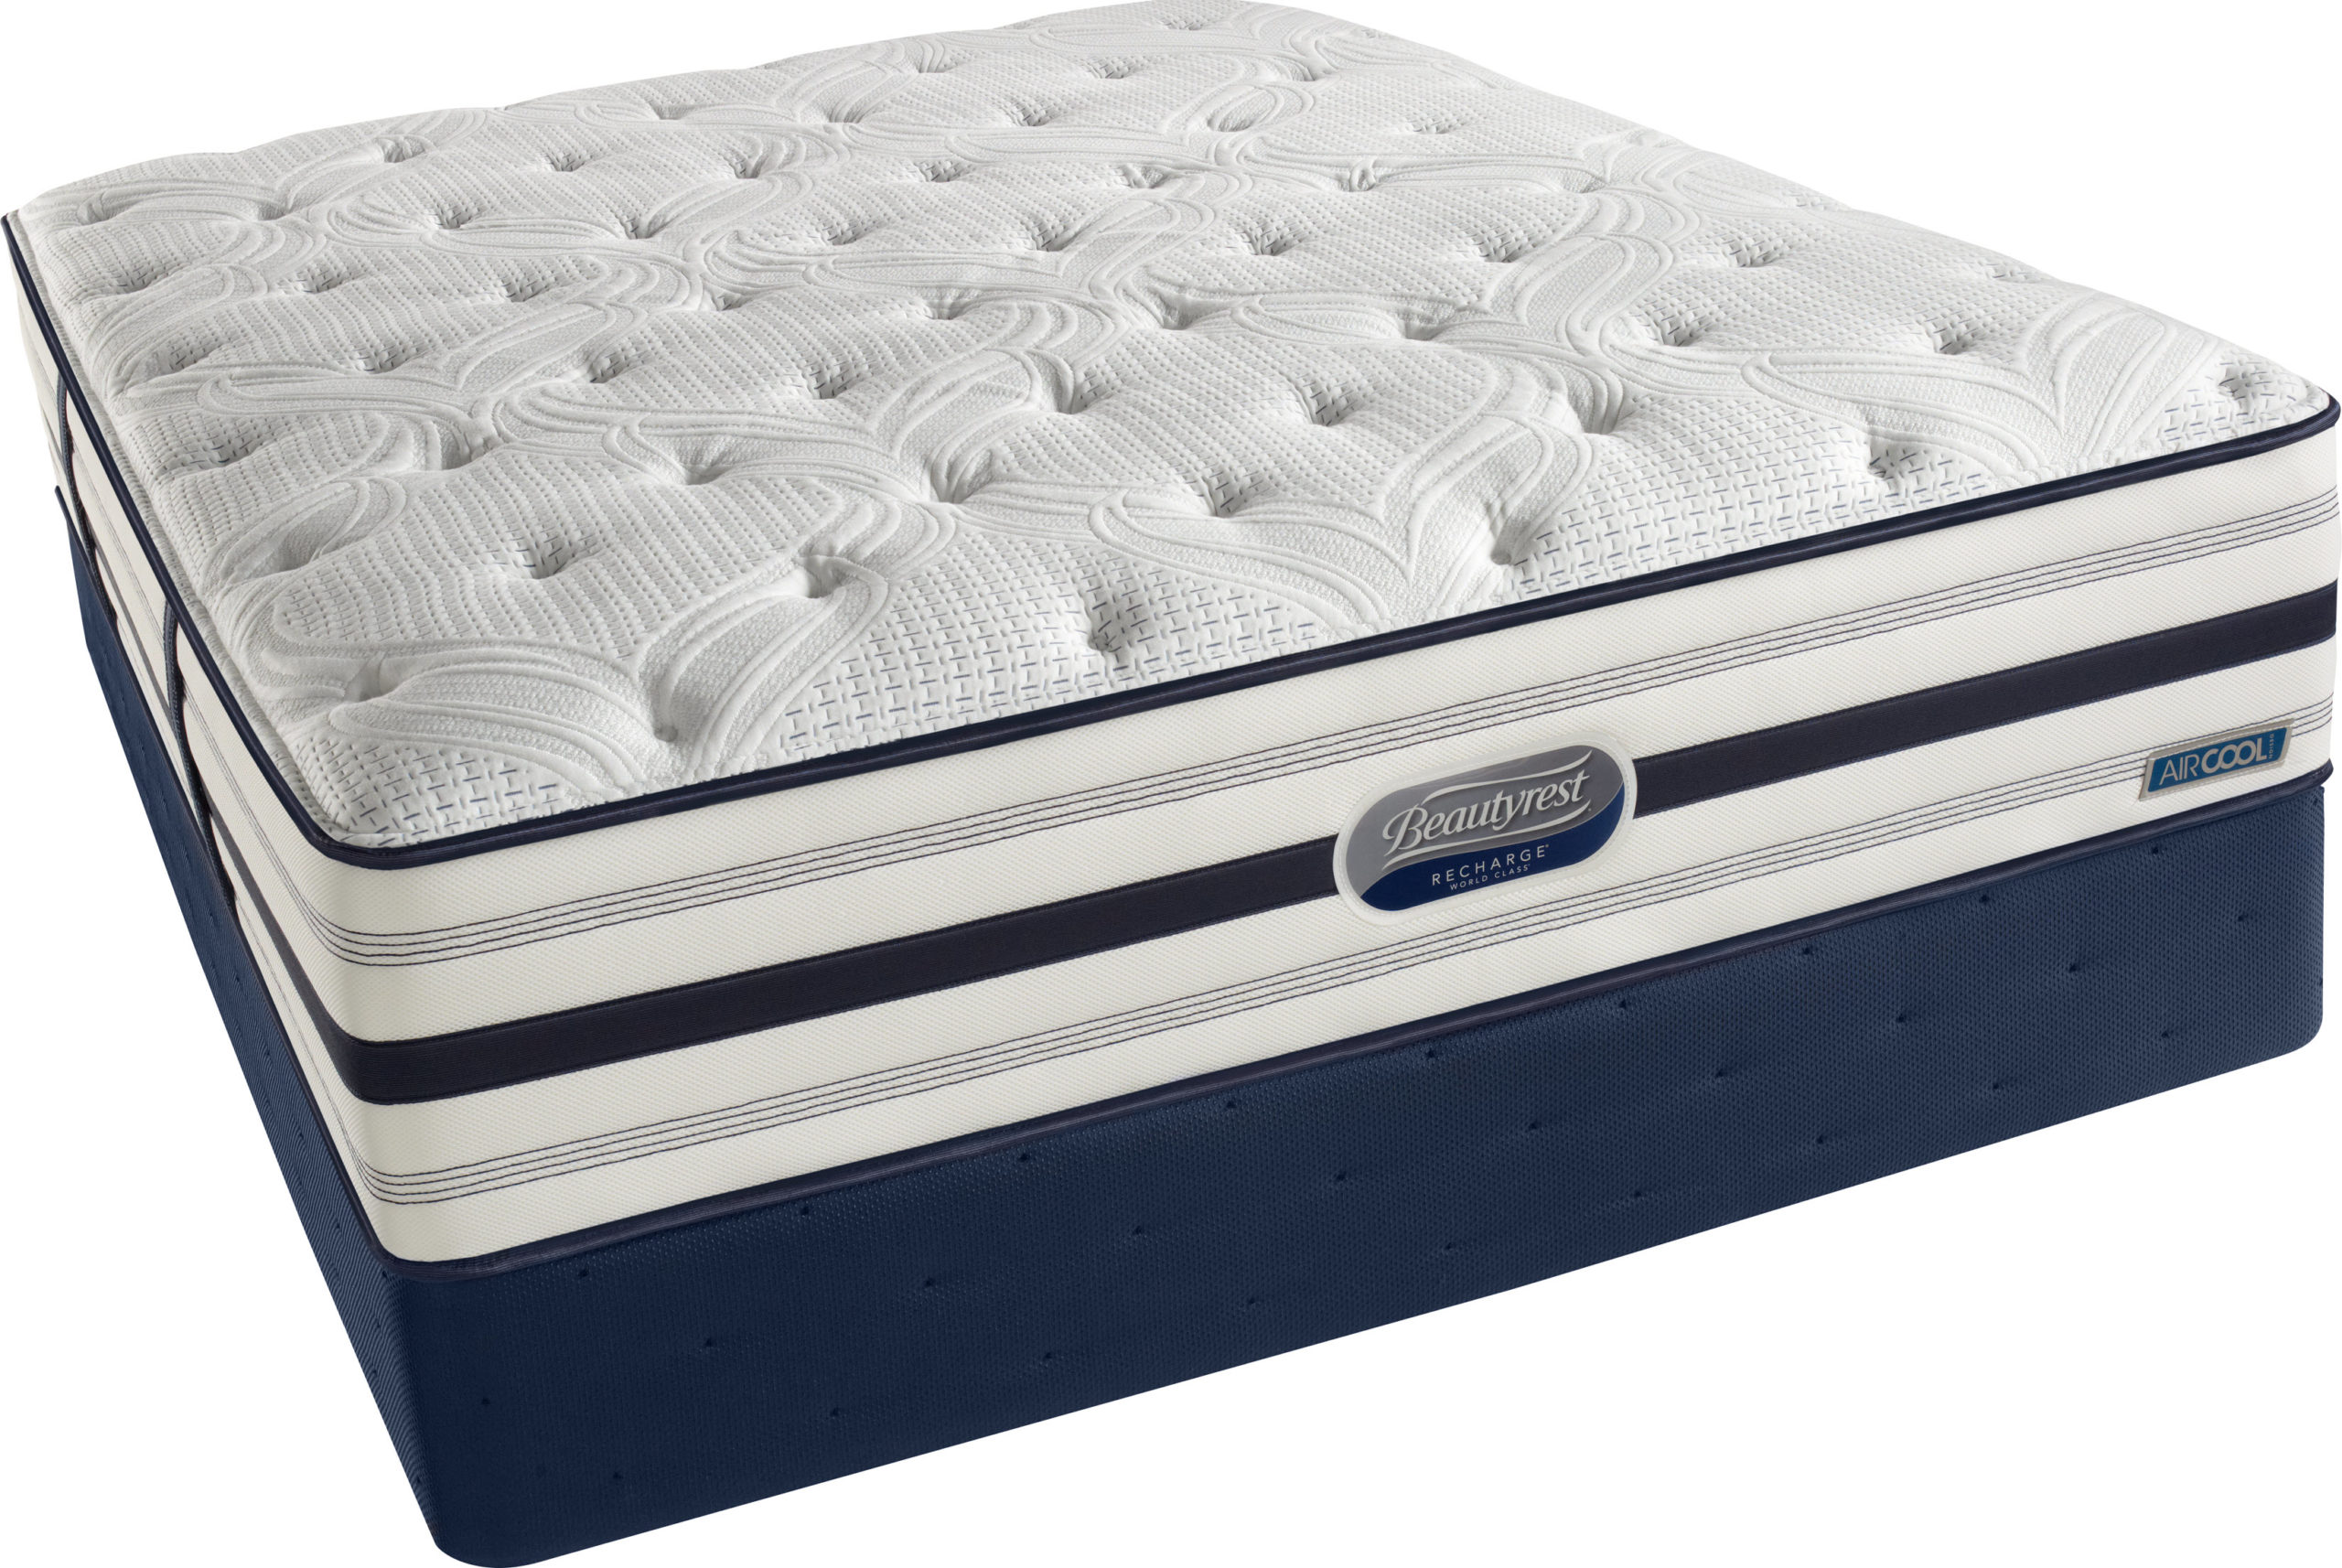 plush high-density foam mattress